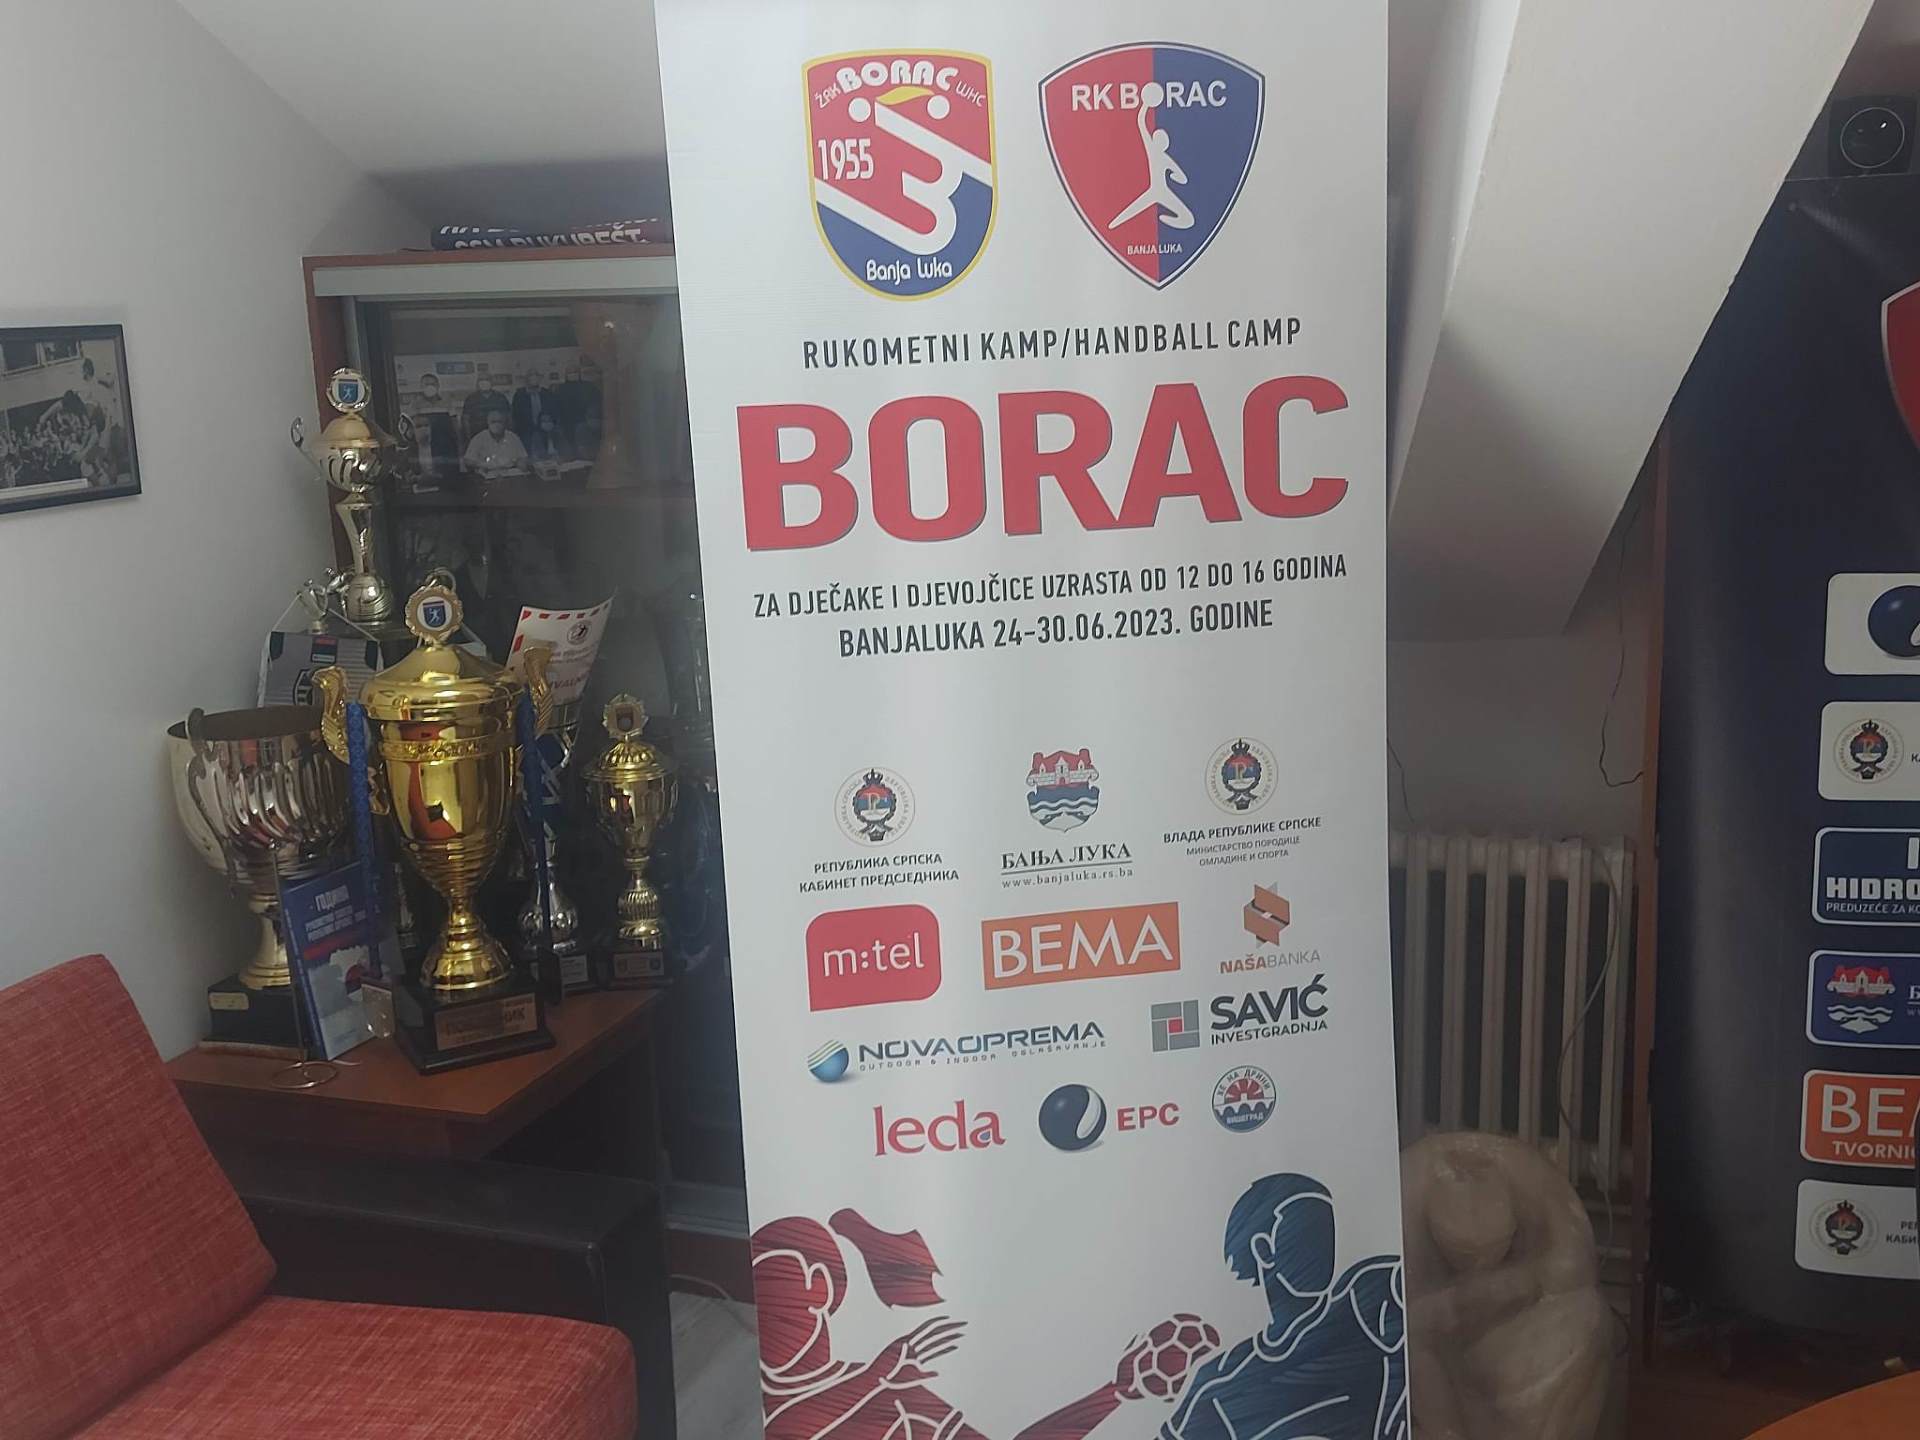  Rukometni kamp RK Borac ŽRK Borac 2023 